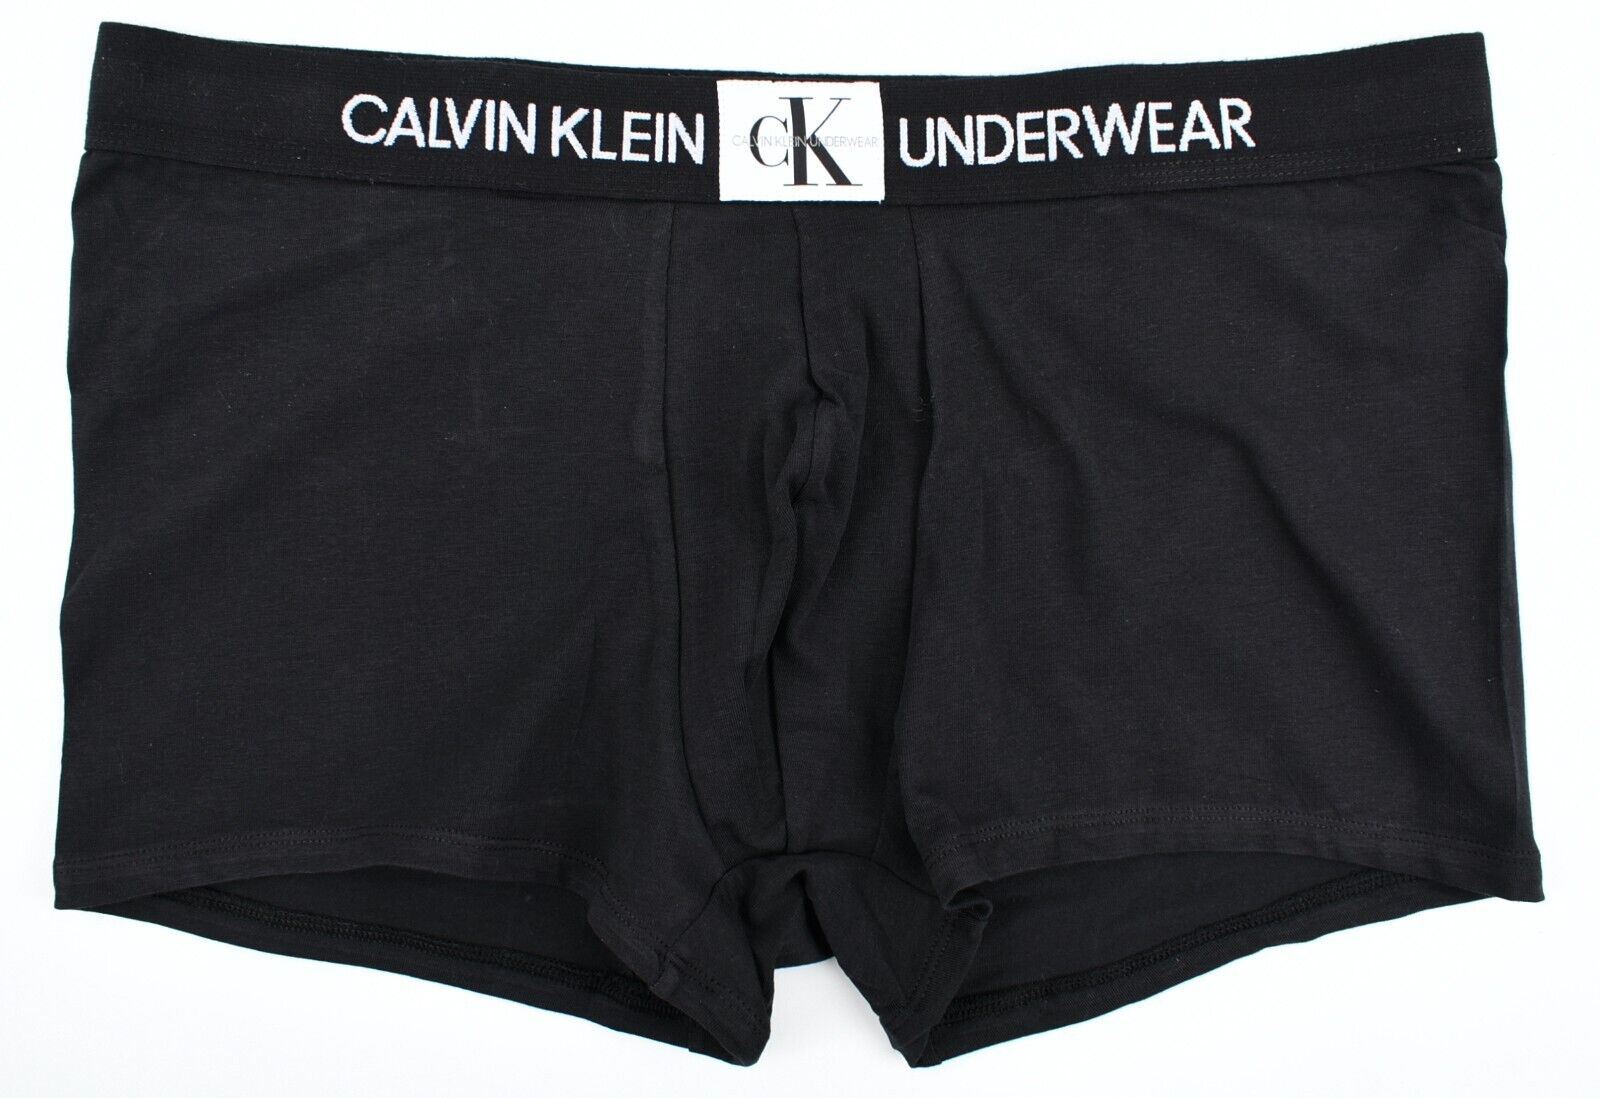 CALVIN KLEIN Monogram Limited Edition Men's Boxer Trunk, Black, size XL (40-42)